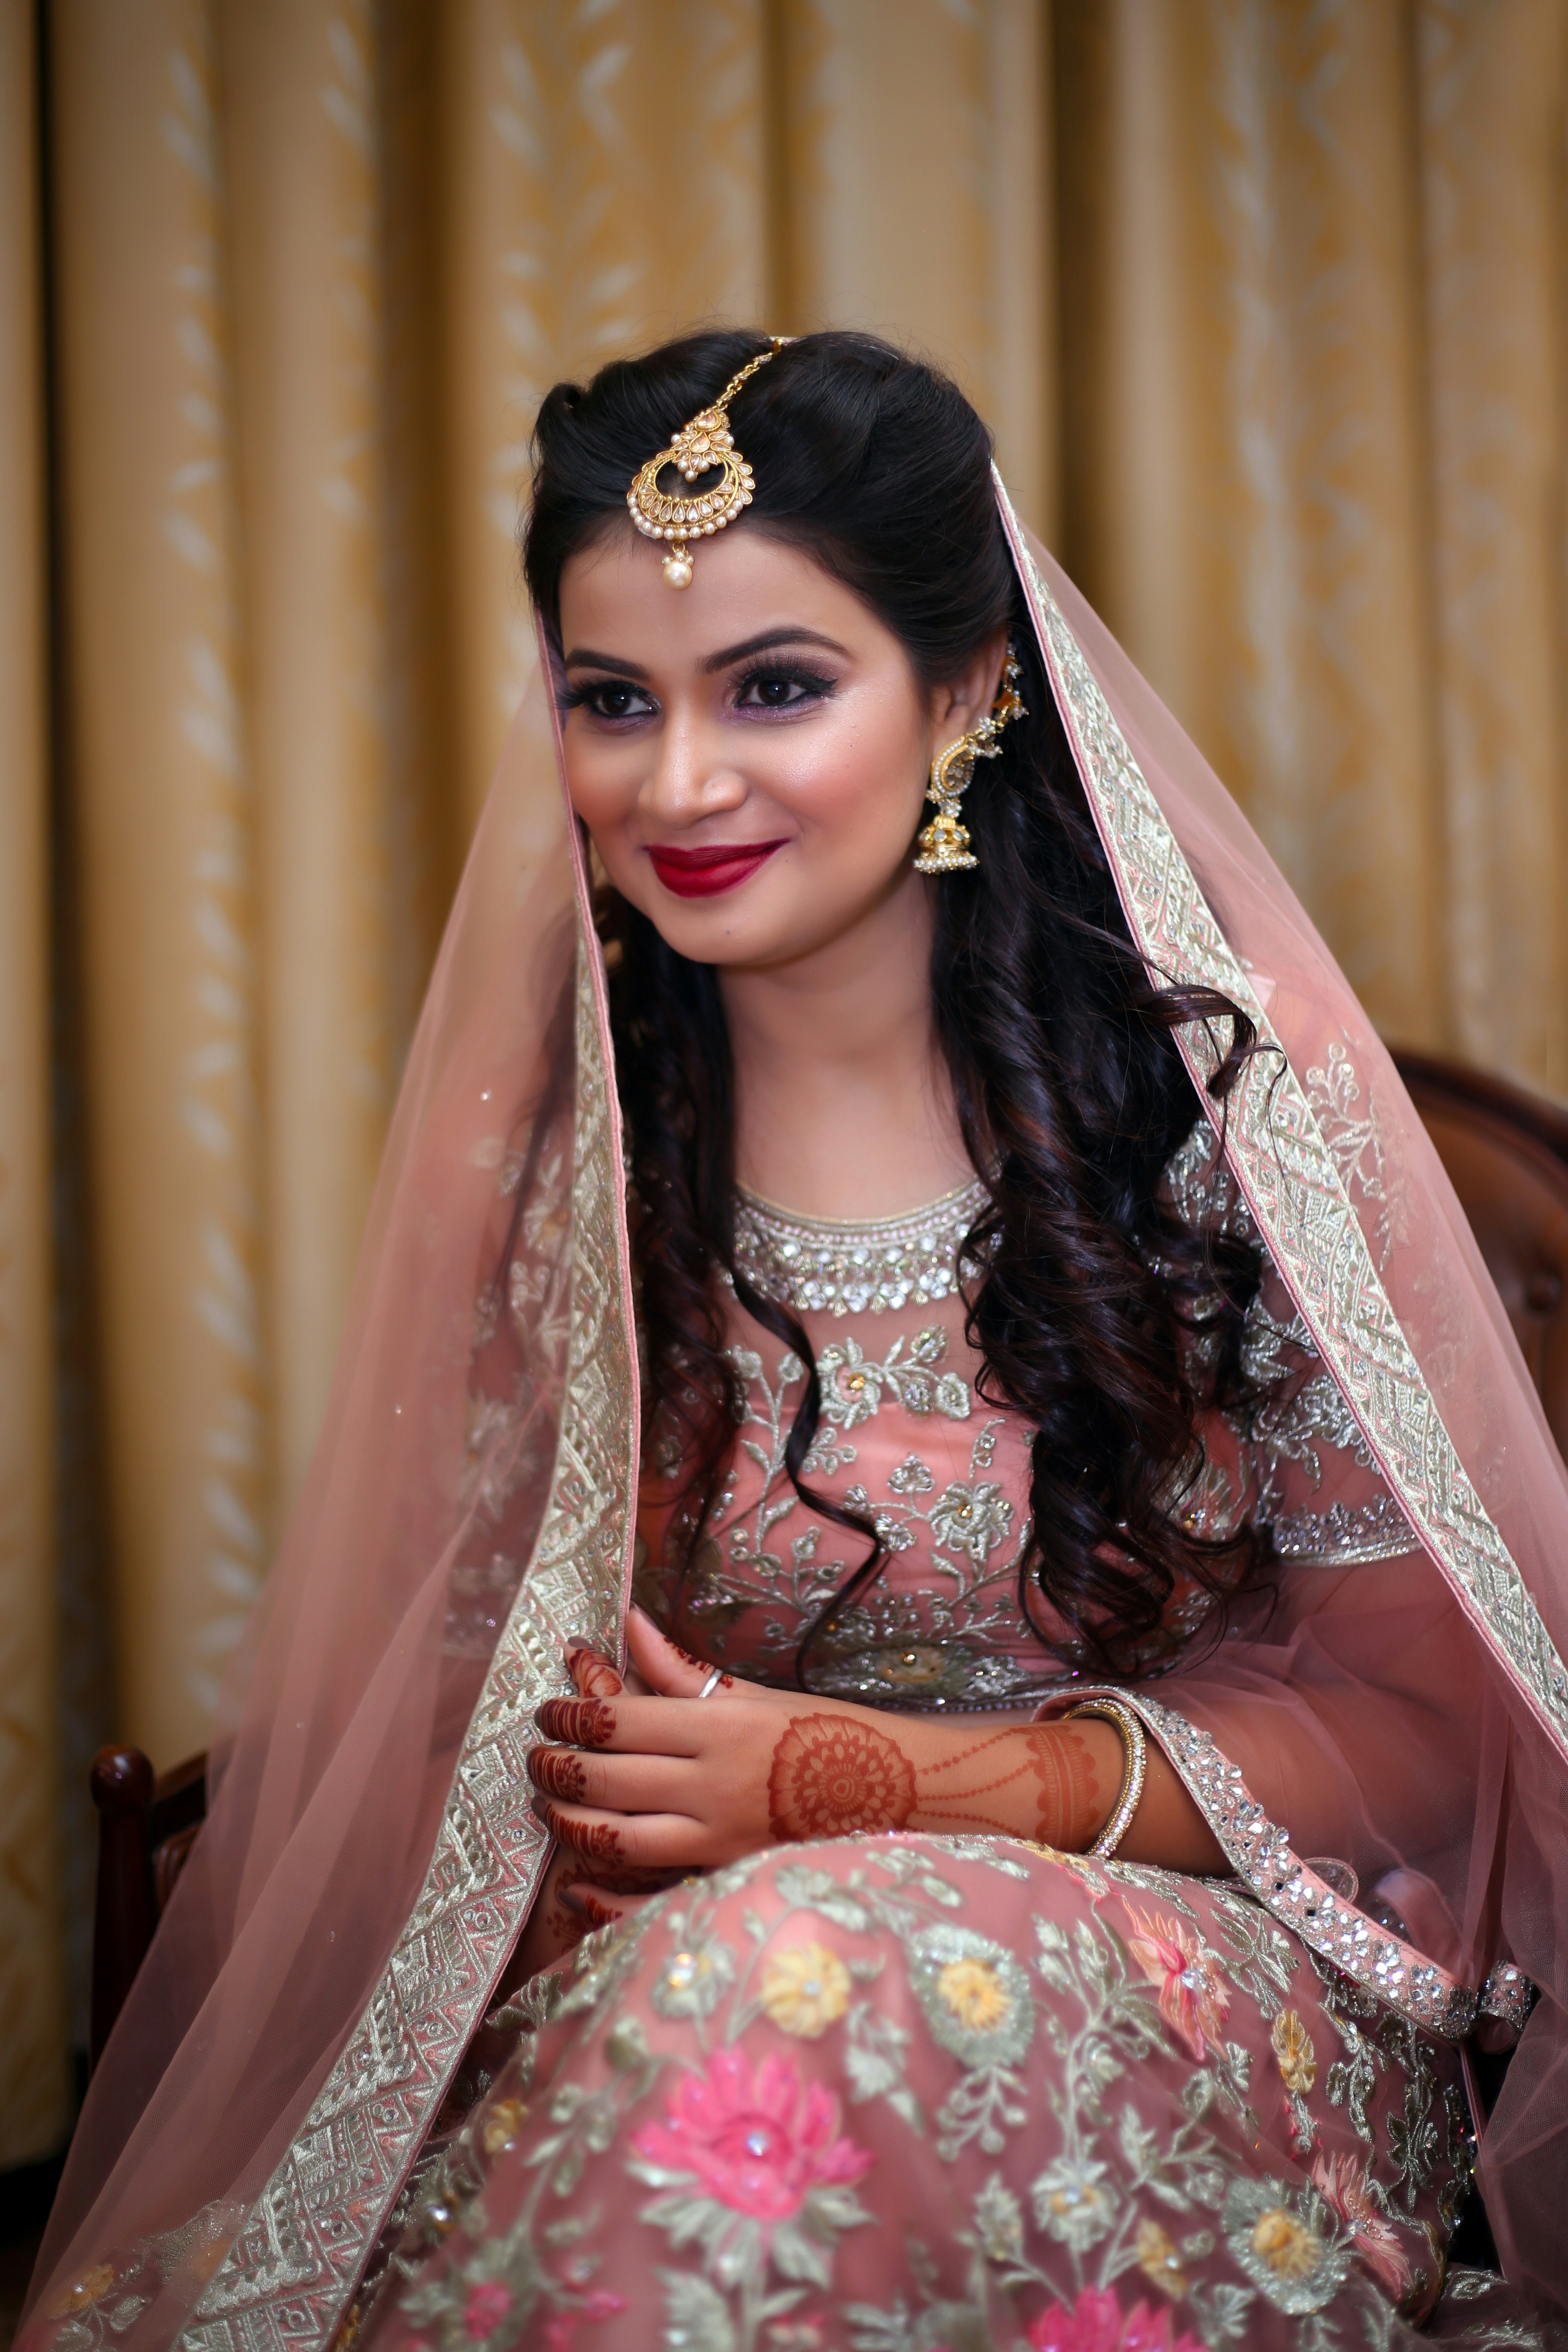 500+ Indian Bride Pictures Download